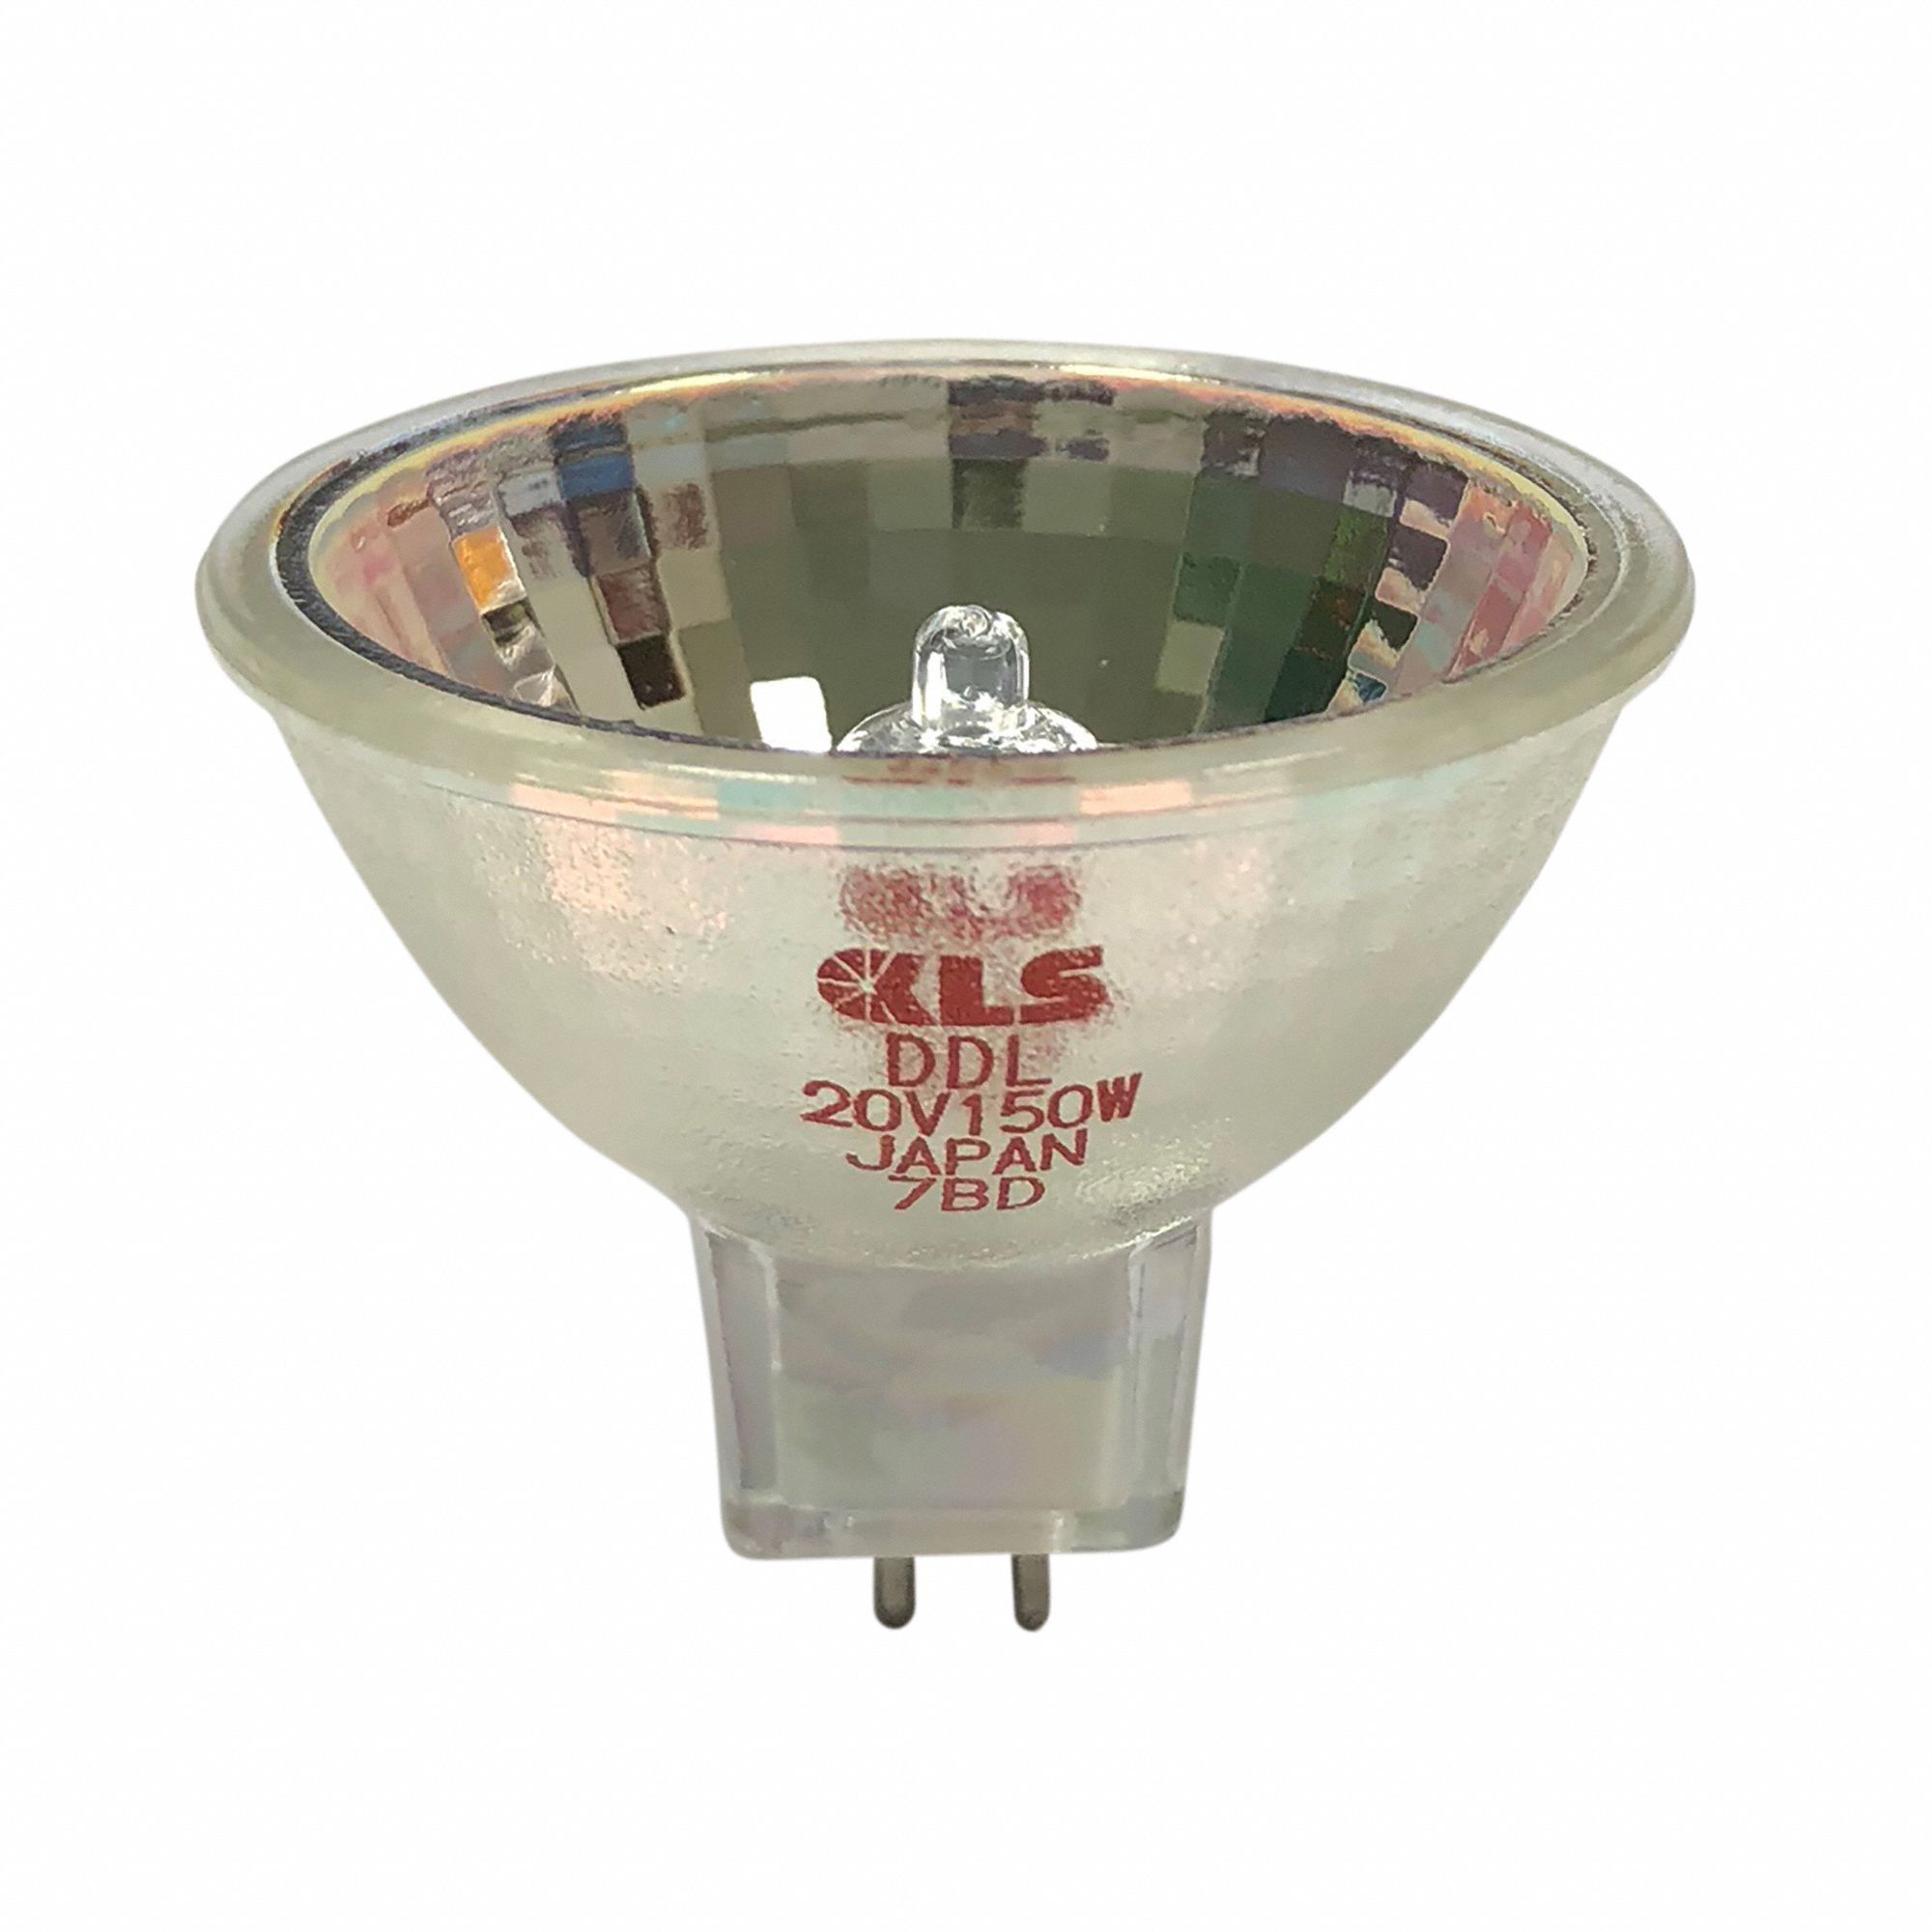 DDL Halogen Reflector Lamp: MR16, 2-Pin (GX5.3), 150 W Watts, Halogen